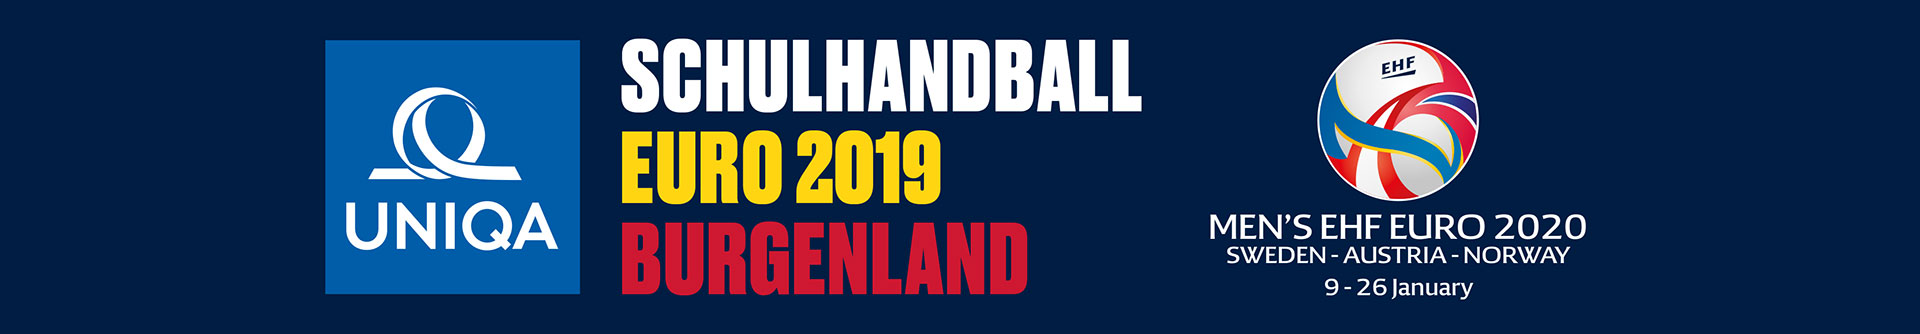 Schulhandball Euro 2019 Burgenland